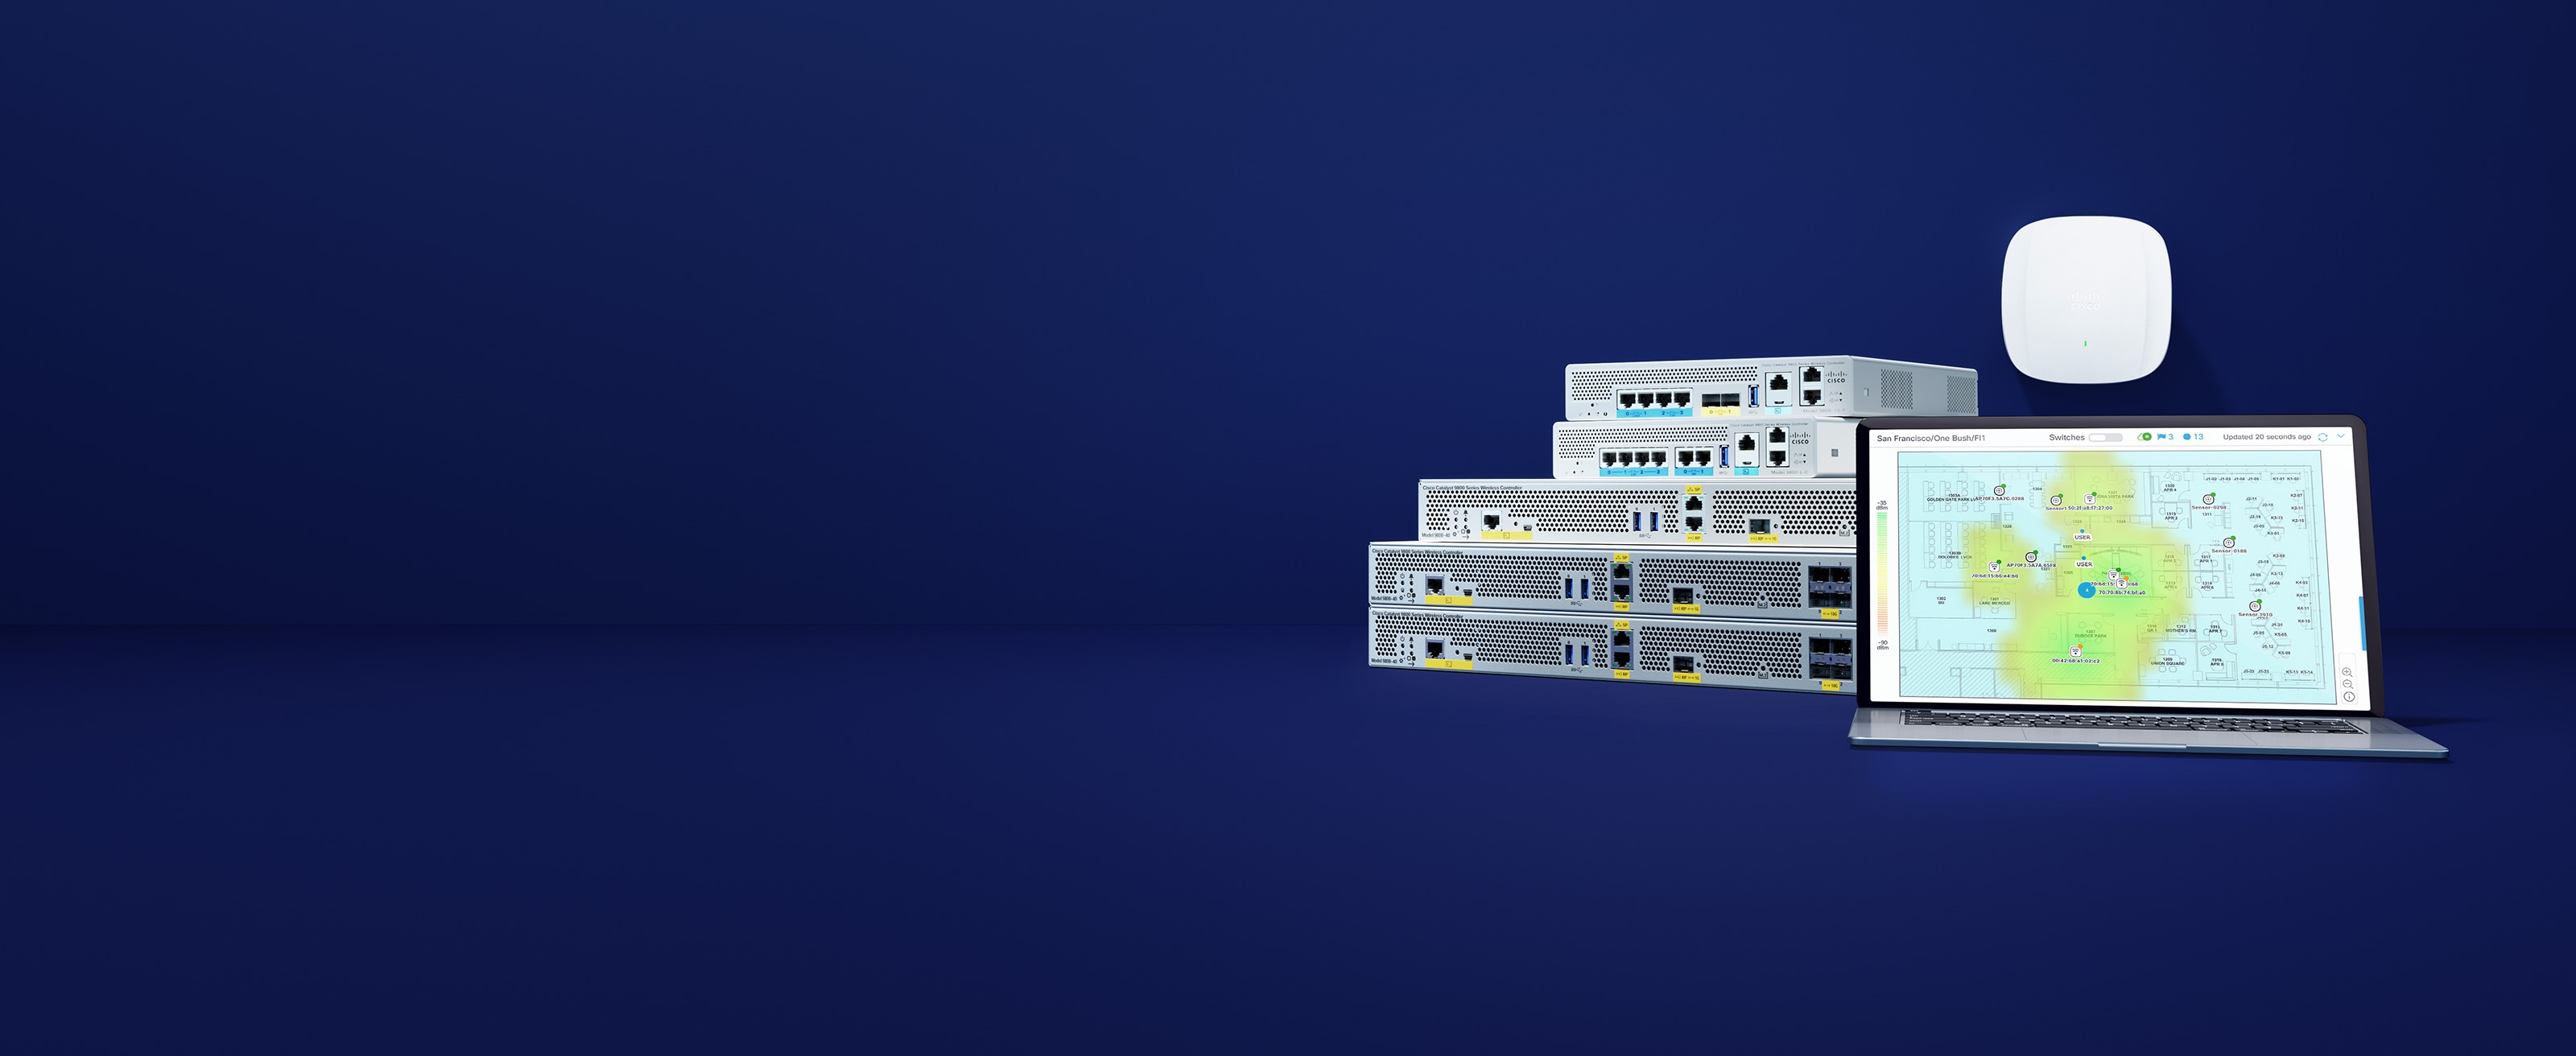 Cisco Catalyst 9800 wireless lan controllers, Cisco Cataylst access point, with Cisco DNA Center 3D analyzer image